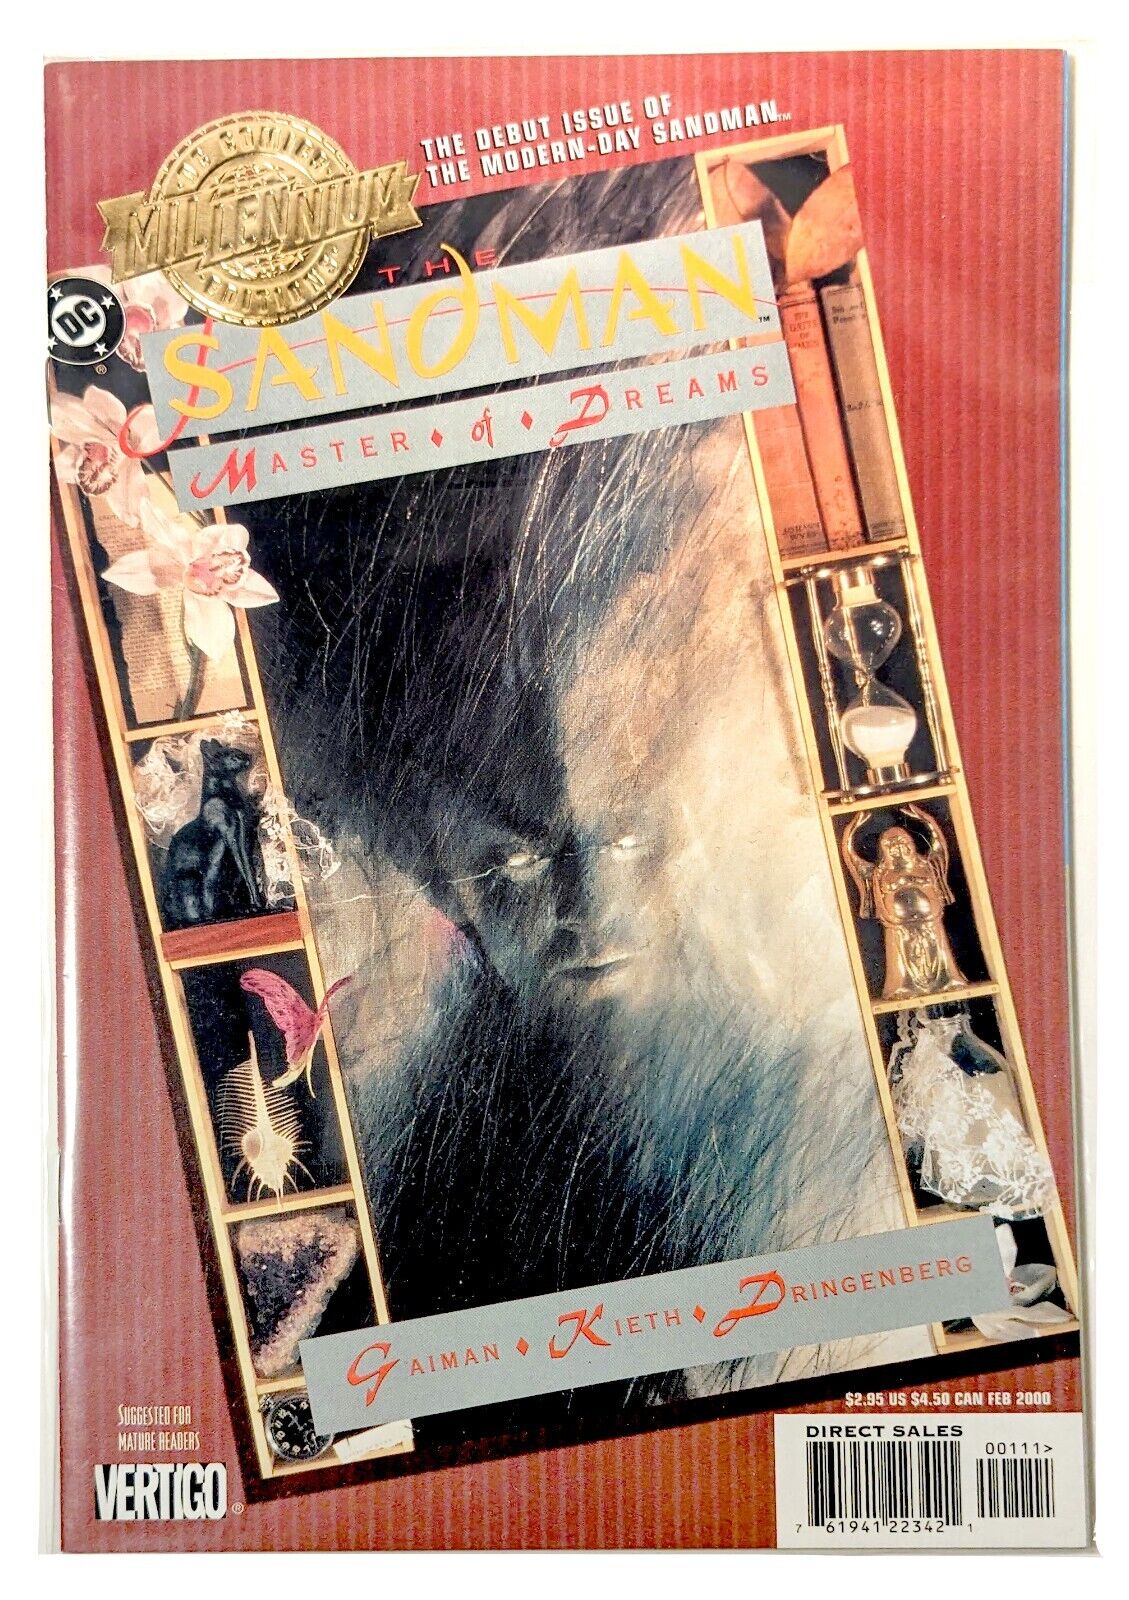 Vertigo Comic Book The Sandman Master of Dreams #1/Millennium Edition, Feb 2000